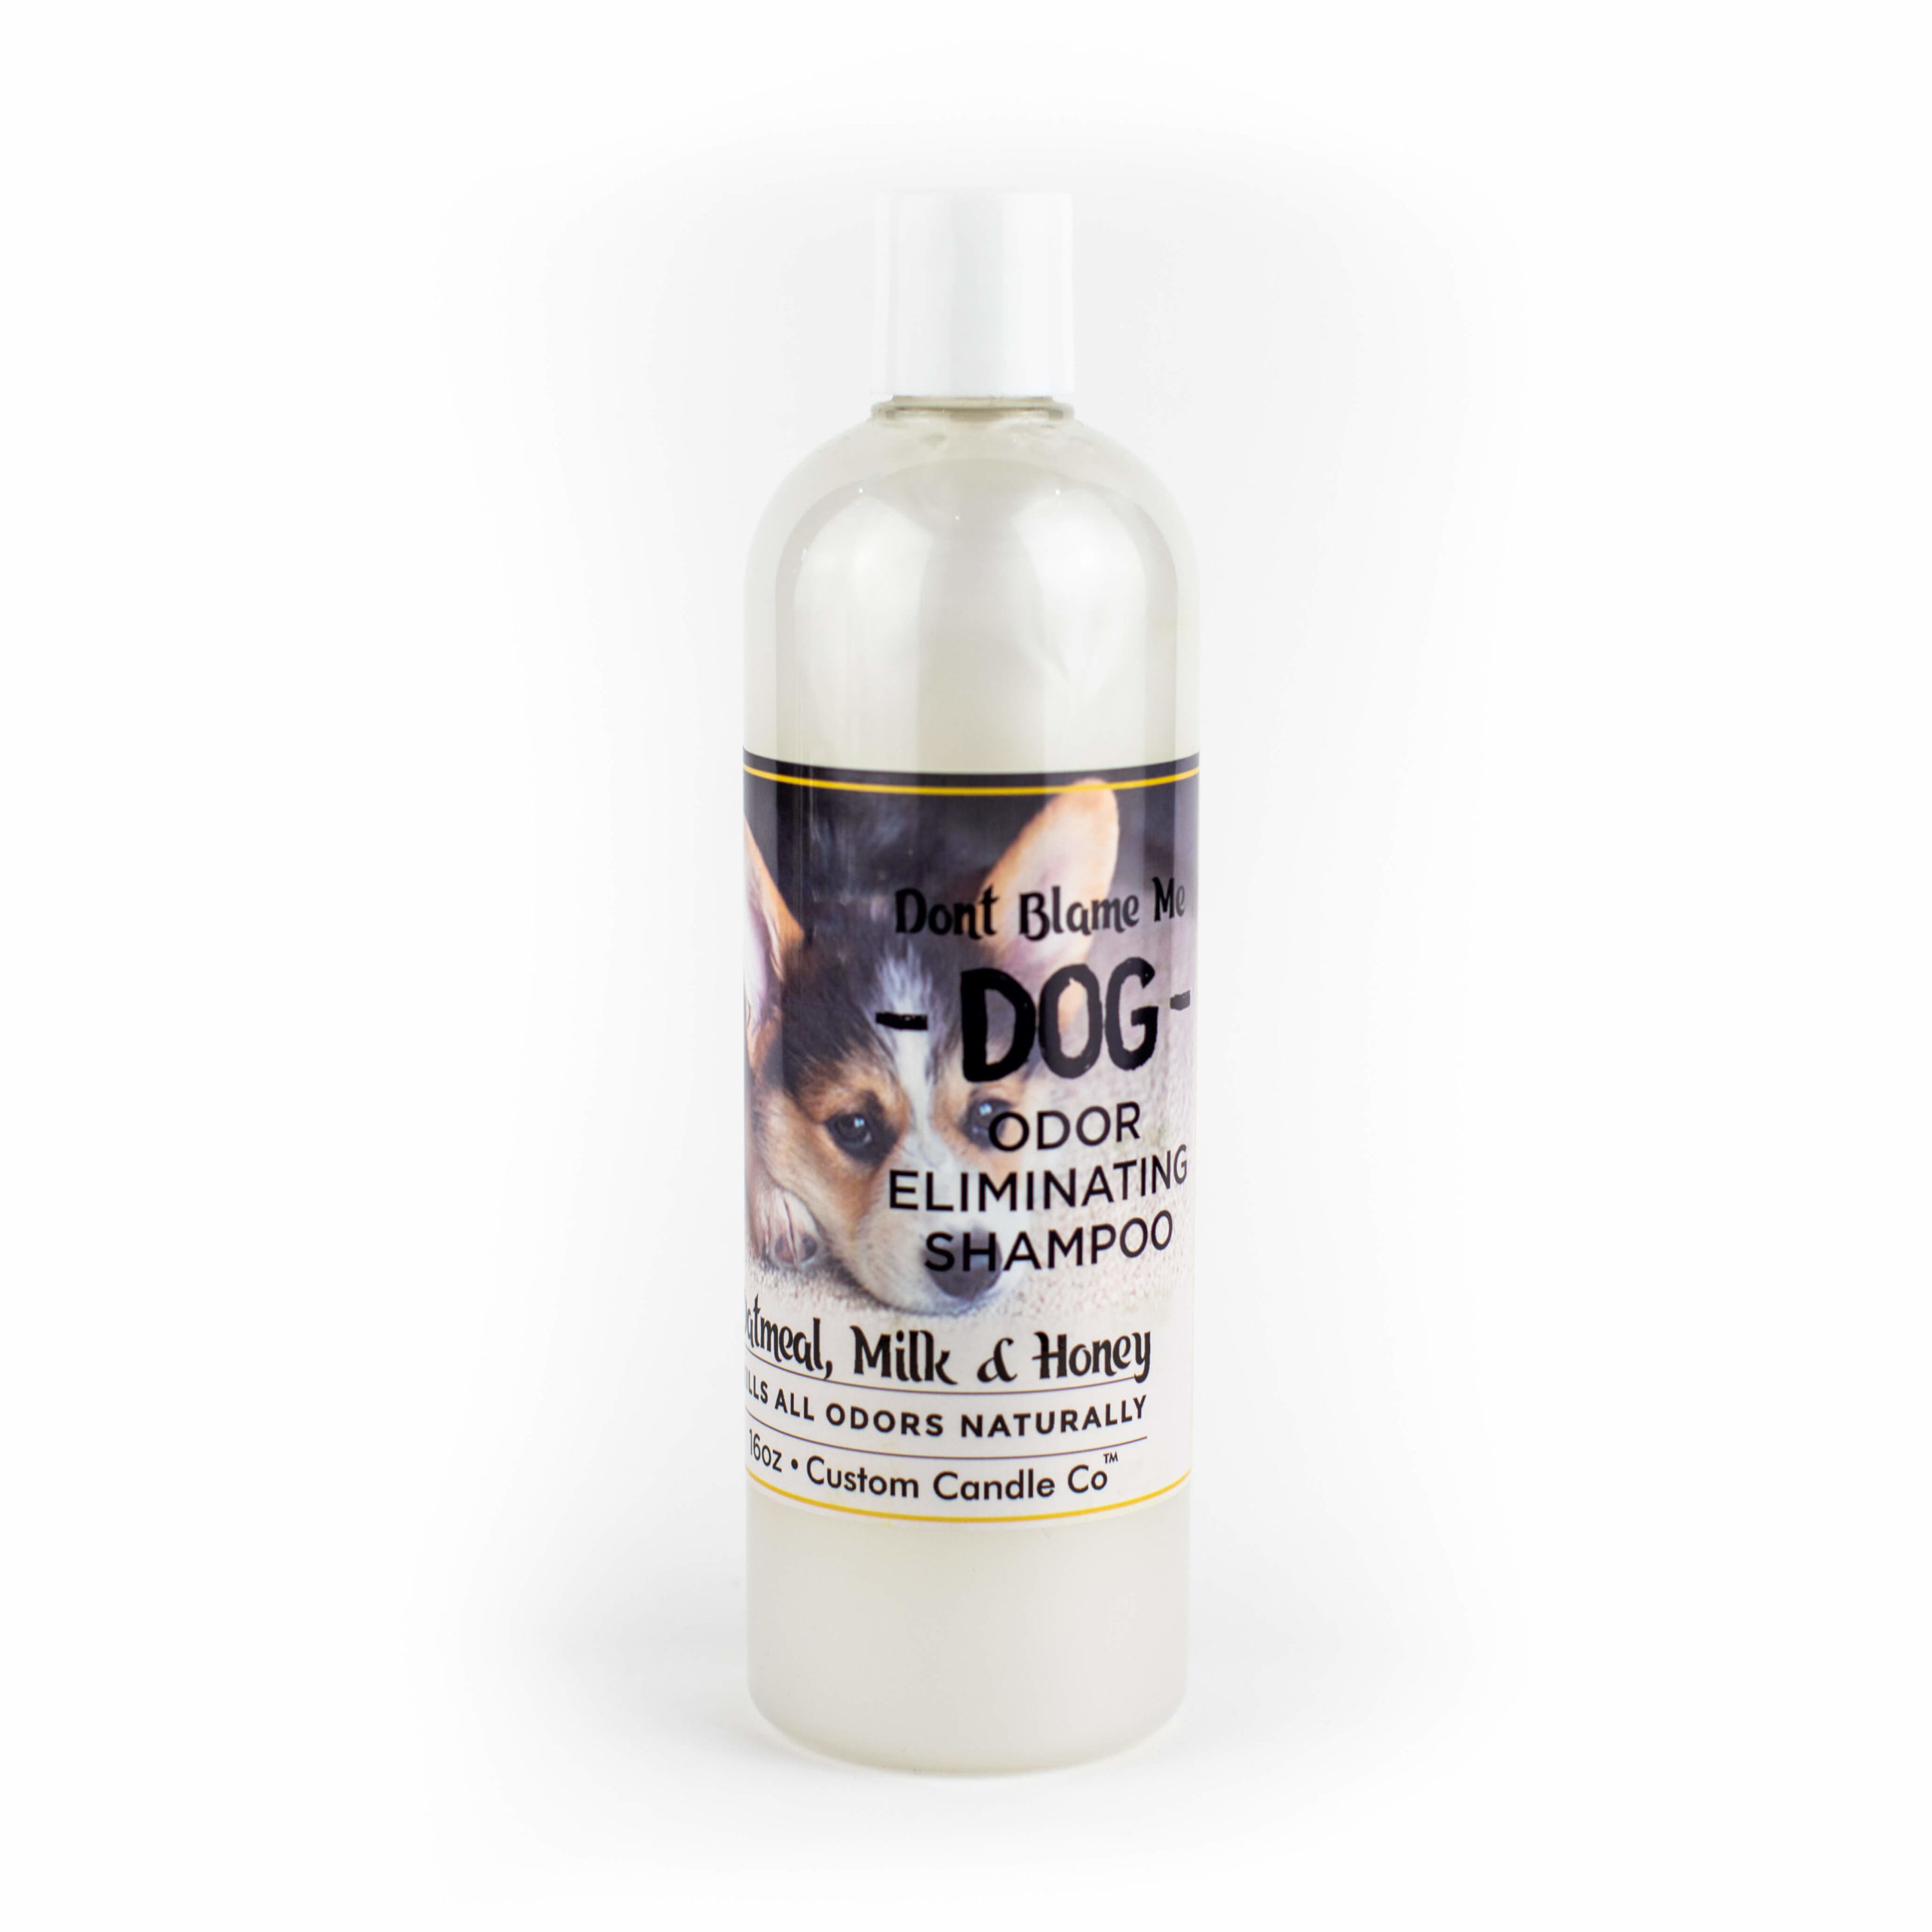 A bottle of Dog Shampoo - Oatmeal Milk Honey 16oz on a white background.